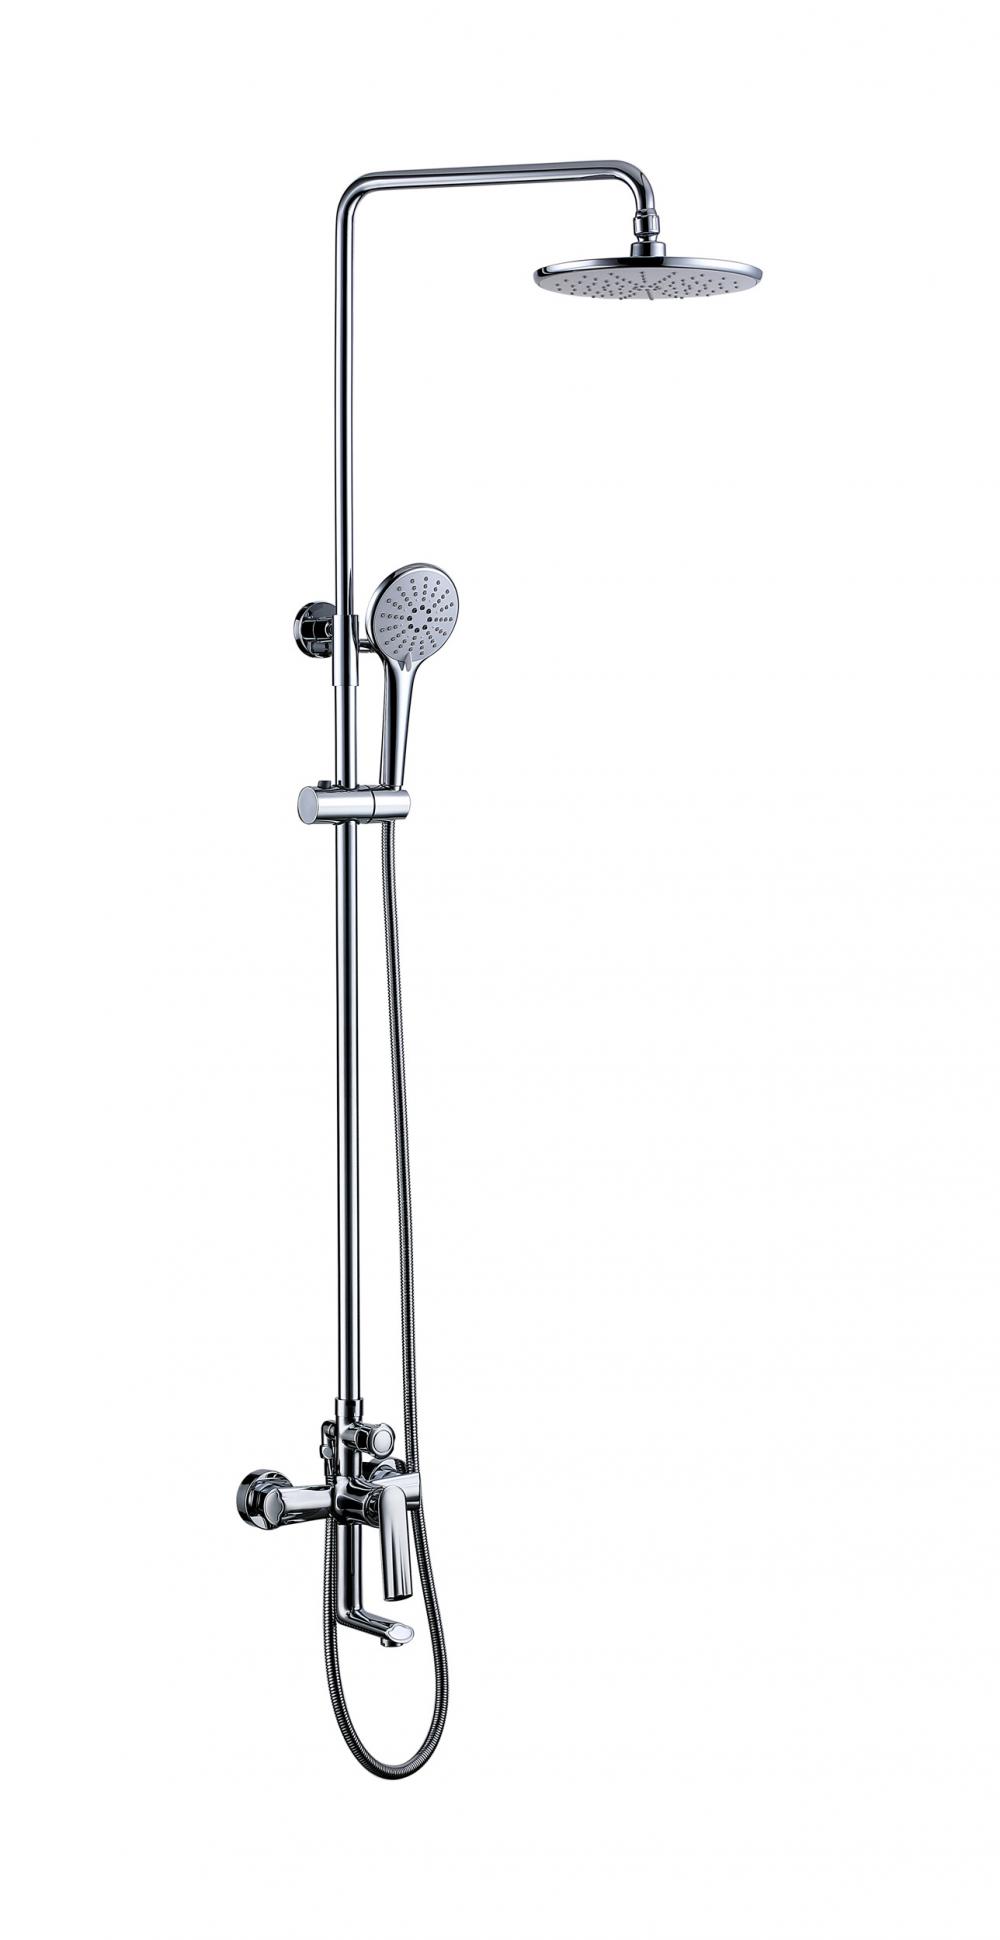 Shower System Faucet Set Bathroom Rainfall Mixer